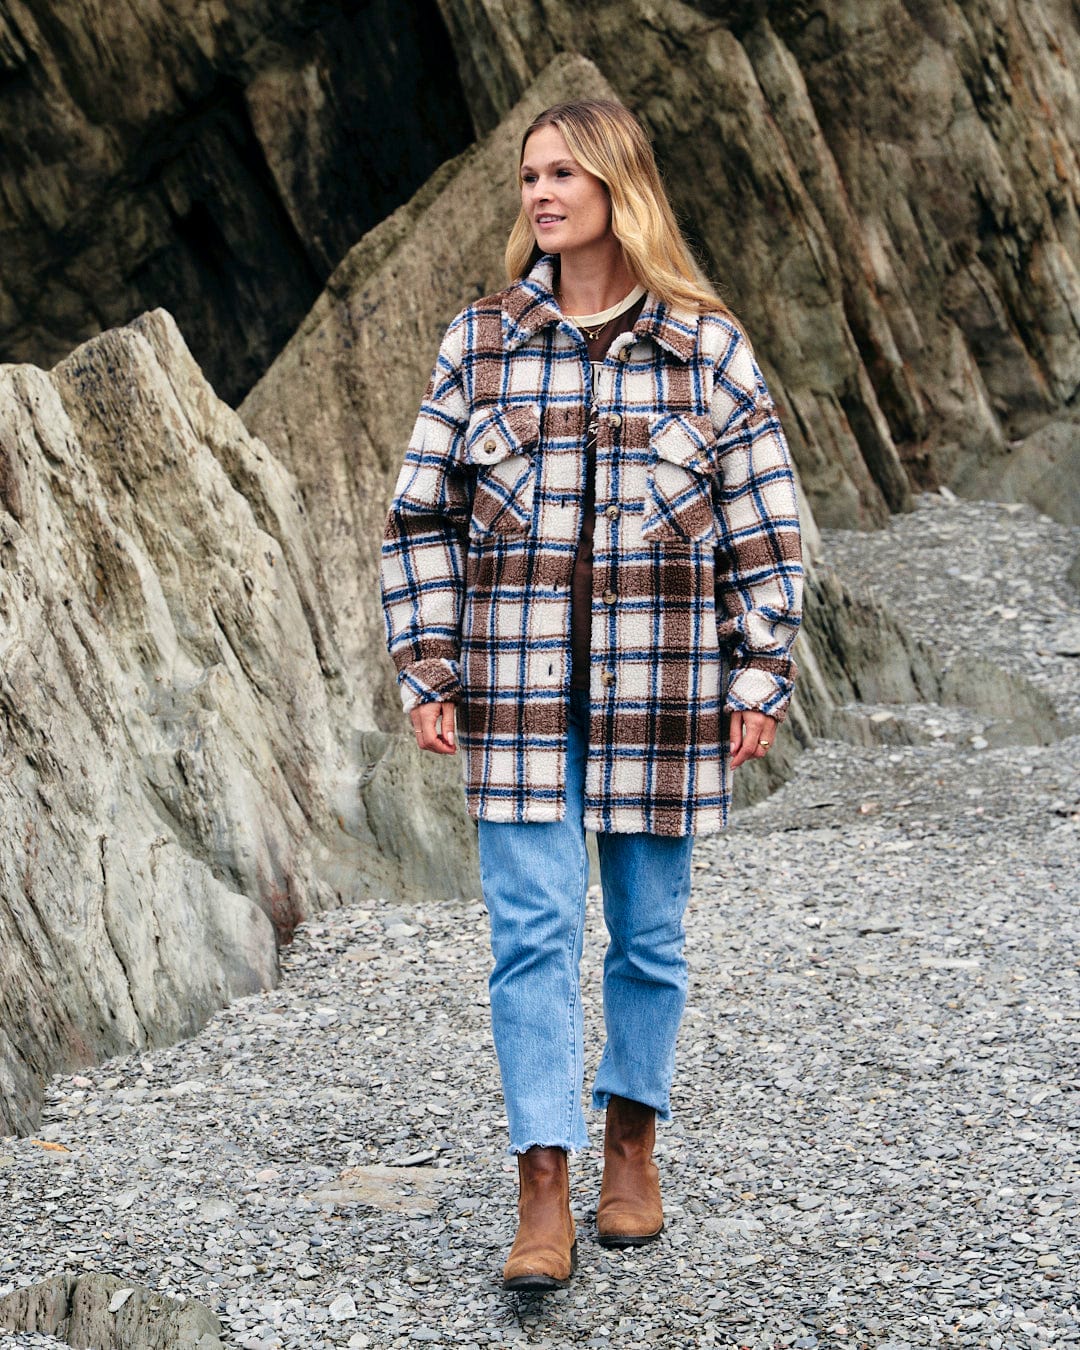 A woman wearing a Laurie - Womens Check Sherpa Fleece Coat - Cream by Saltrock walking on rocks in cold weather.